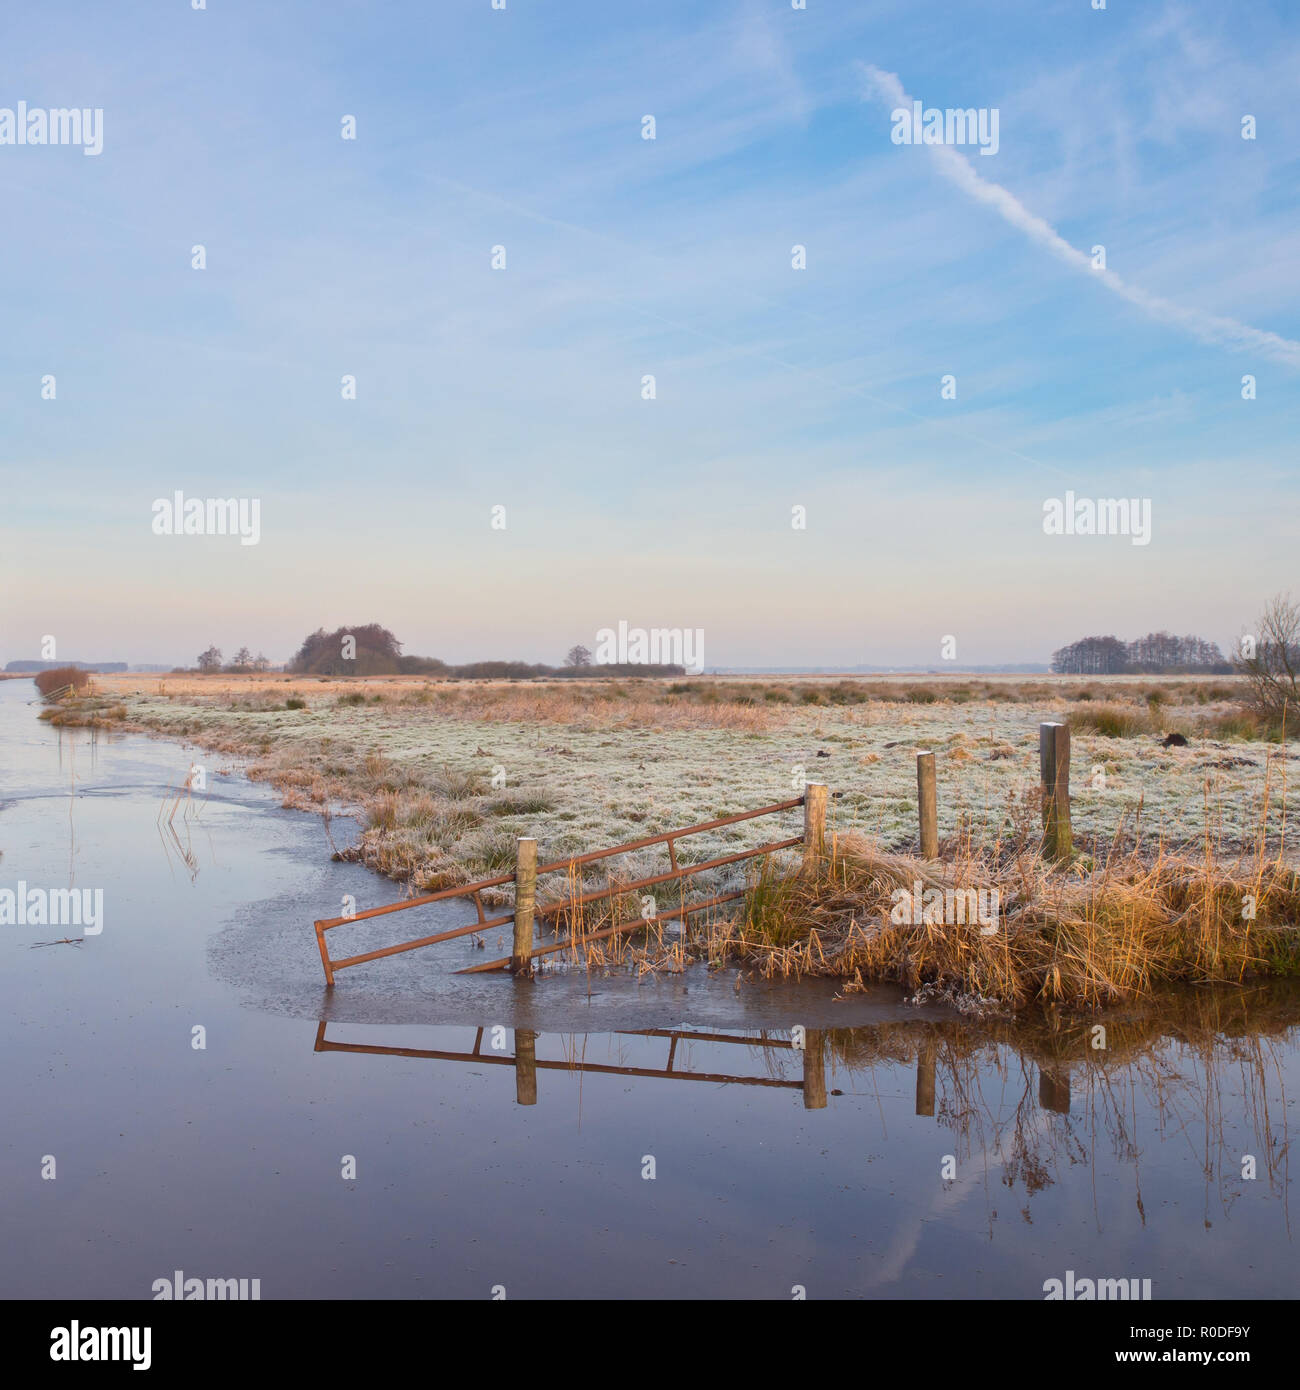 Scenic rural landscape in winter setting Stock Photo